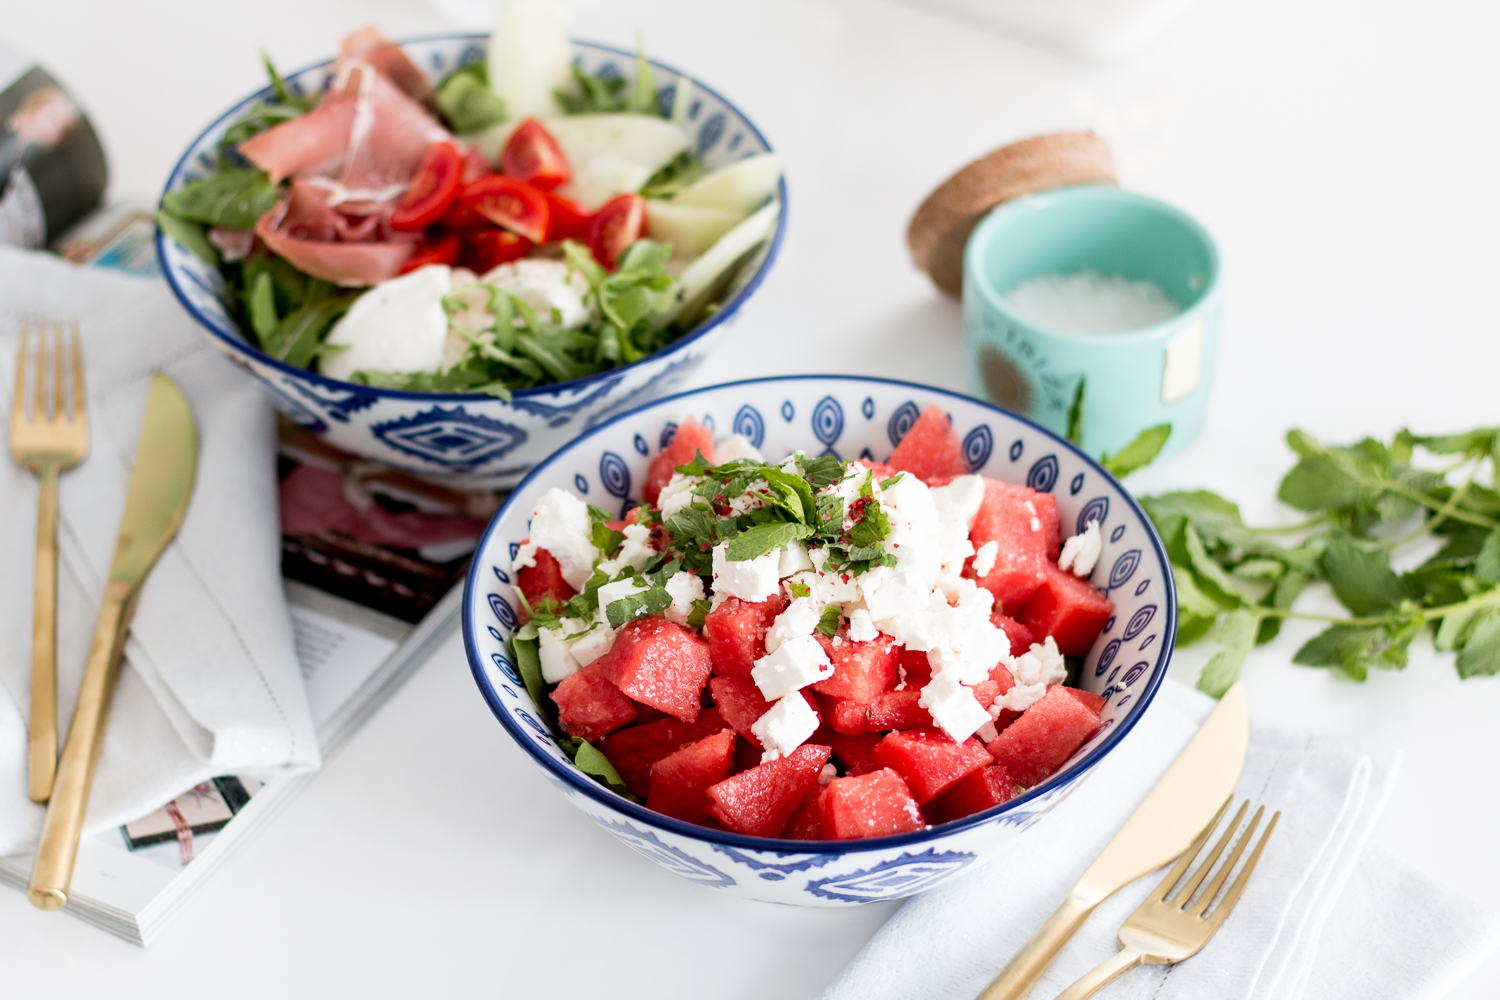 Melon Salad two ways: Feta and Prosciutto | Love Daily Dose